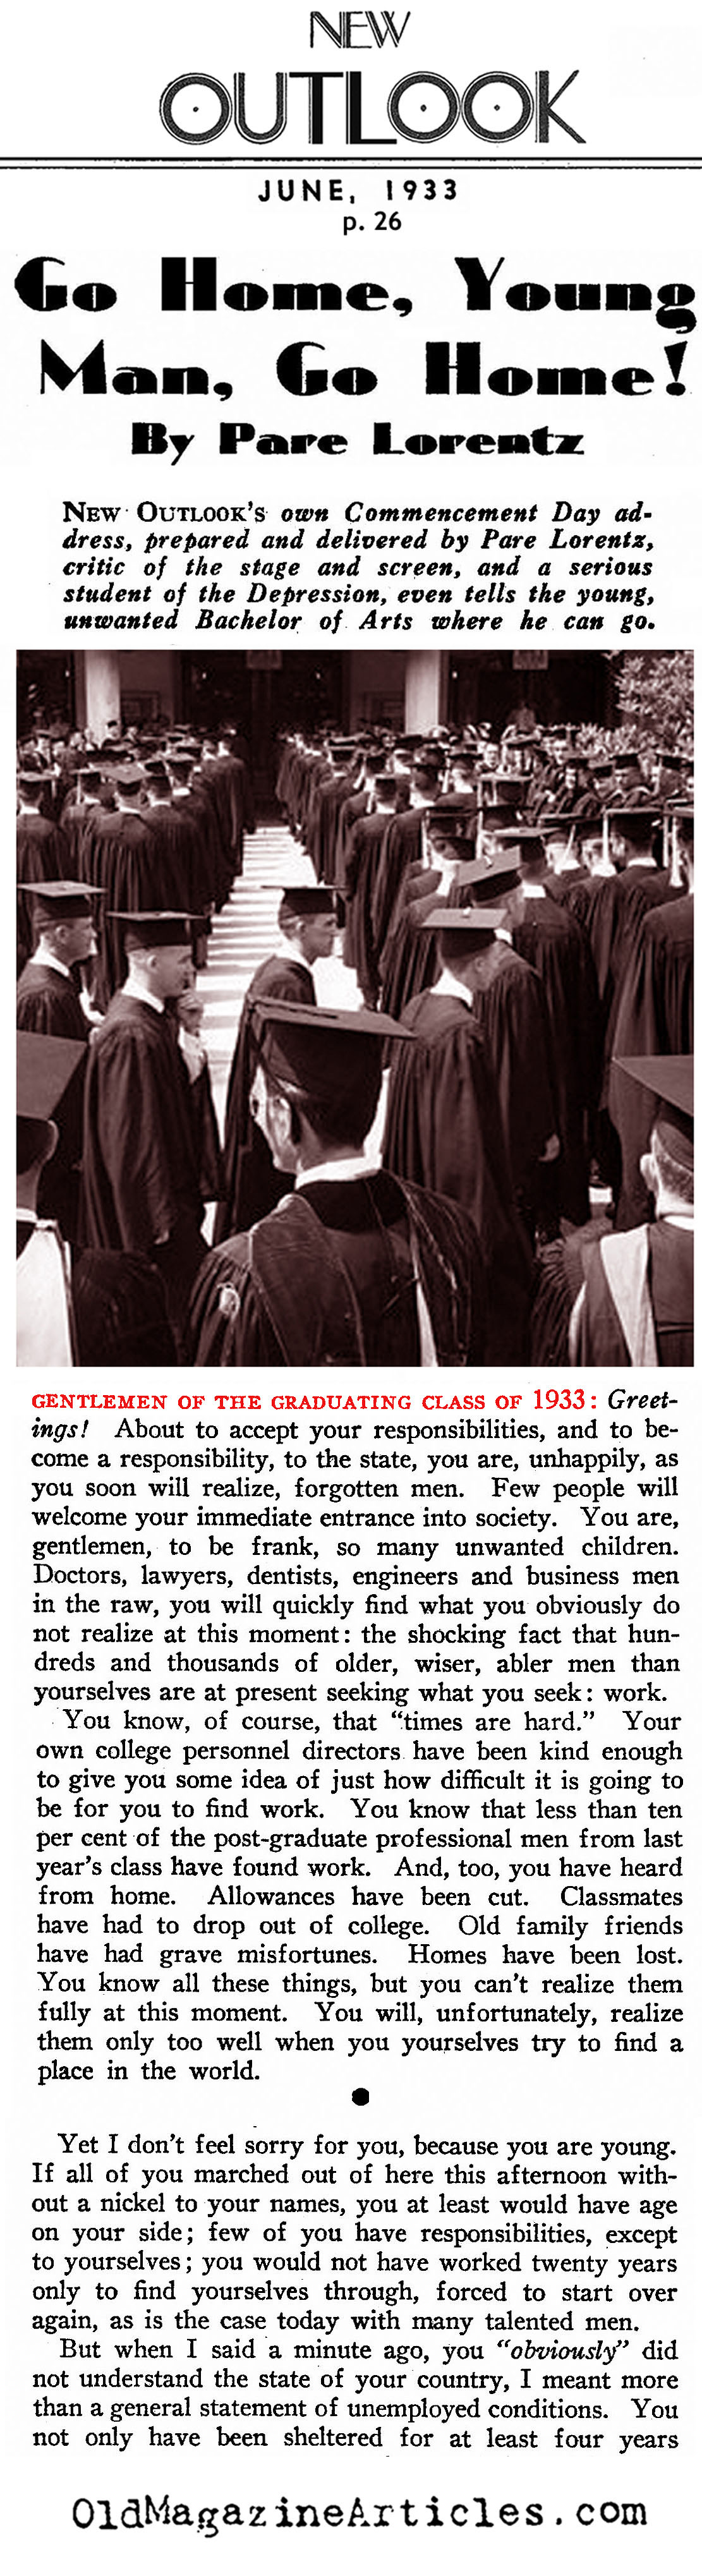 Your Graduation Gift: Despair (New Outlook, 1933)